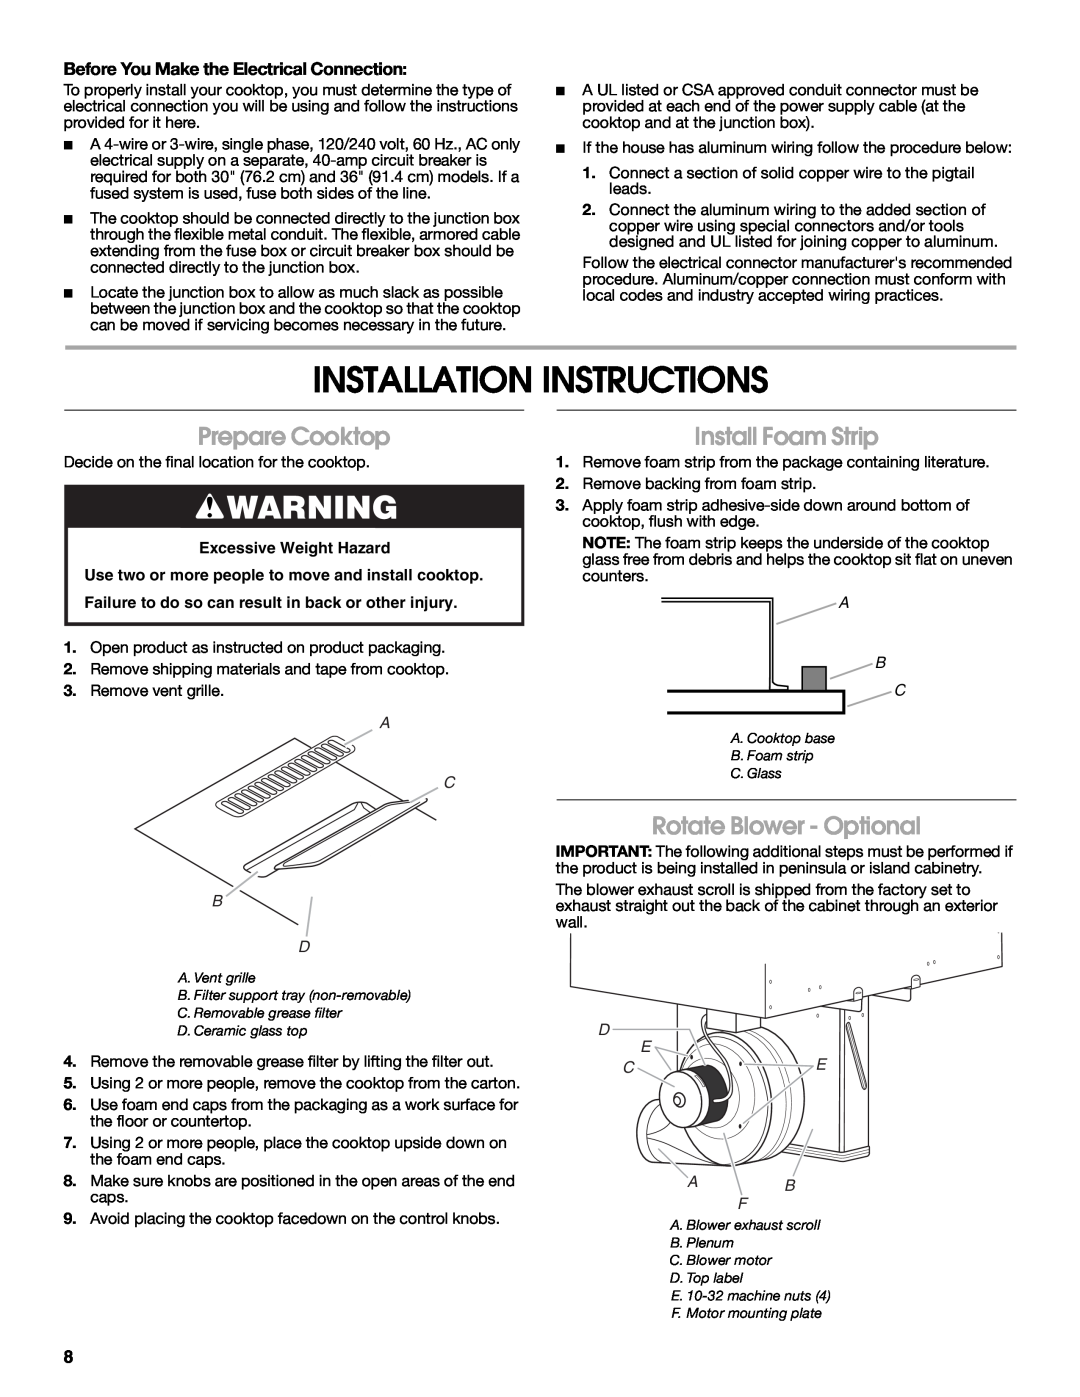 Jenn-Air W10197059B Installation Instructions, Prepare Cooktop, Install Foam Strip, Rotate Blower - Optional, A C B D 